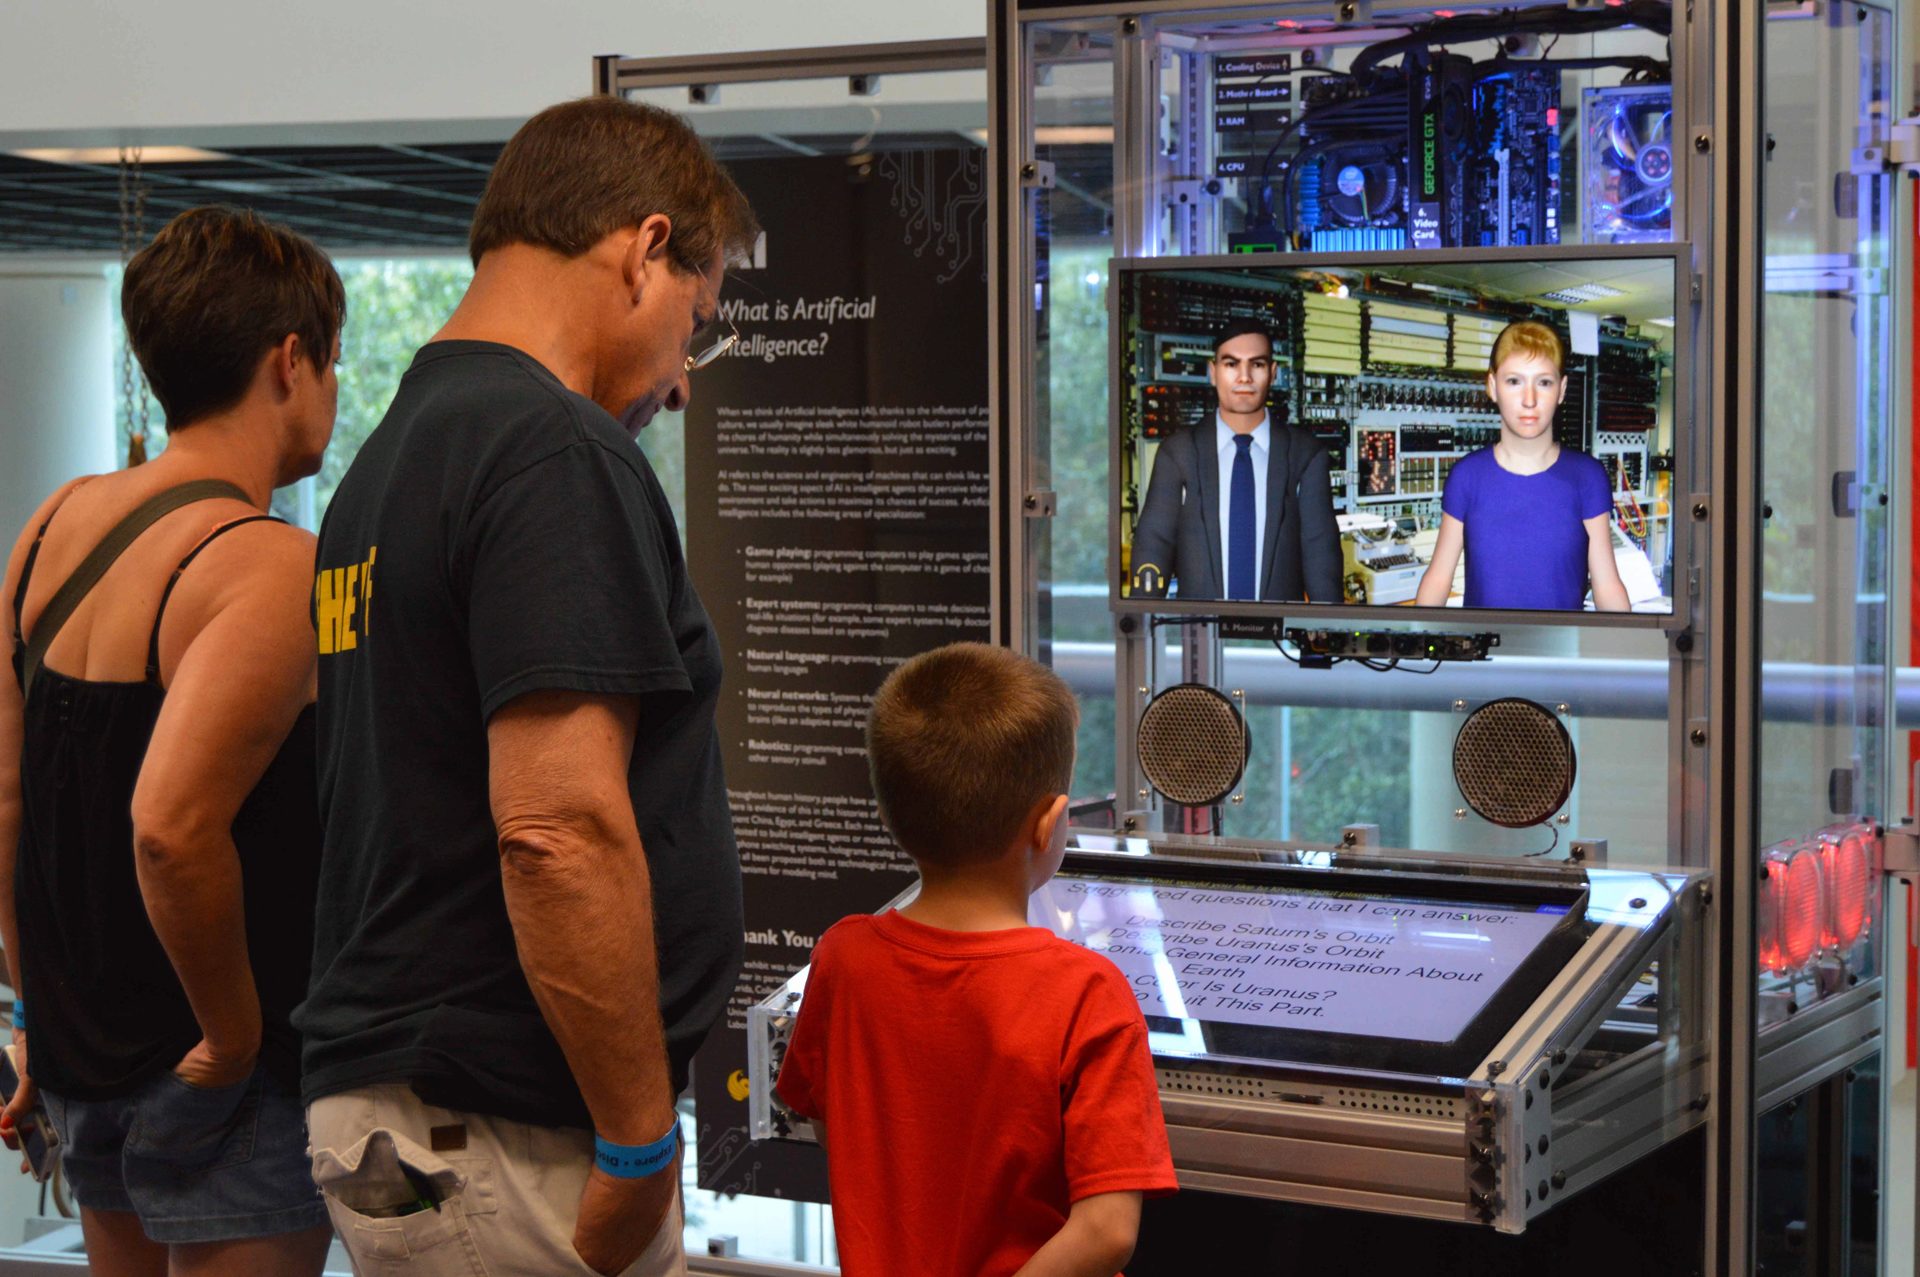 Virtual Avatar Exhibit at the Orlando Science Center